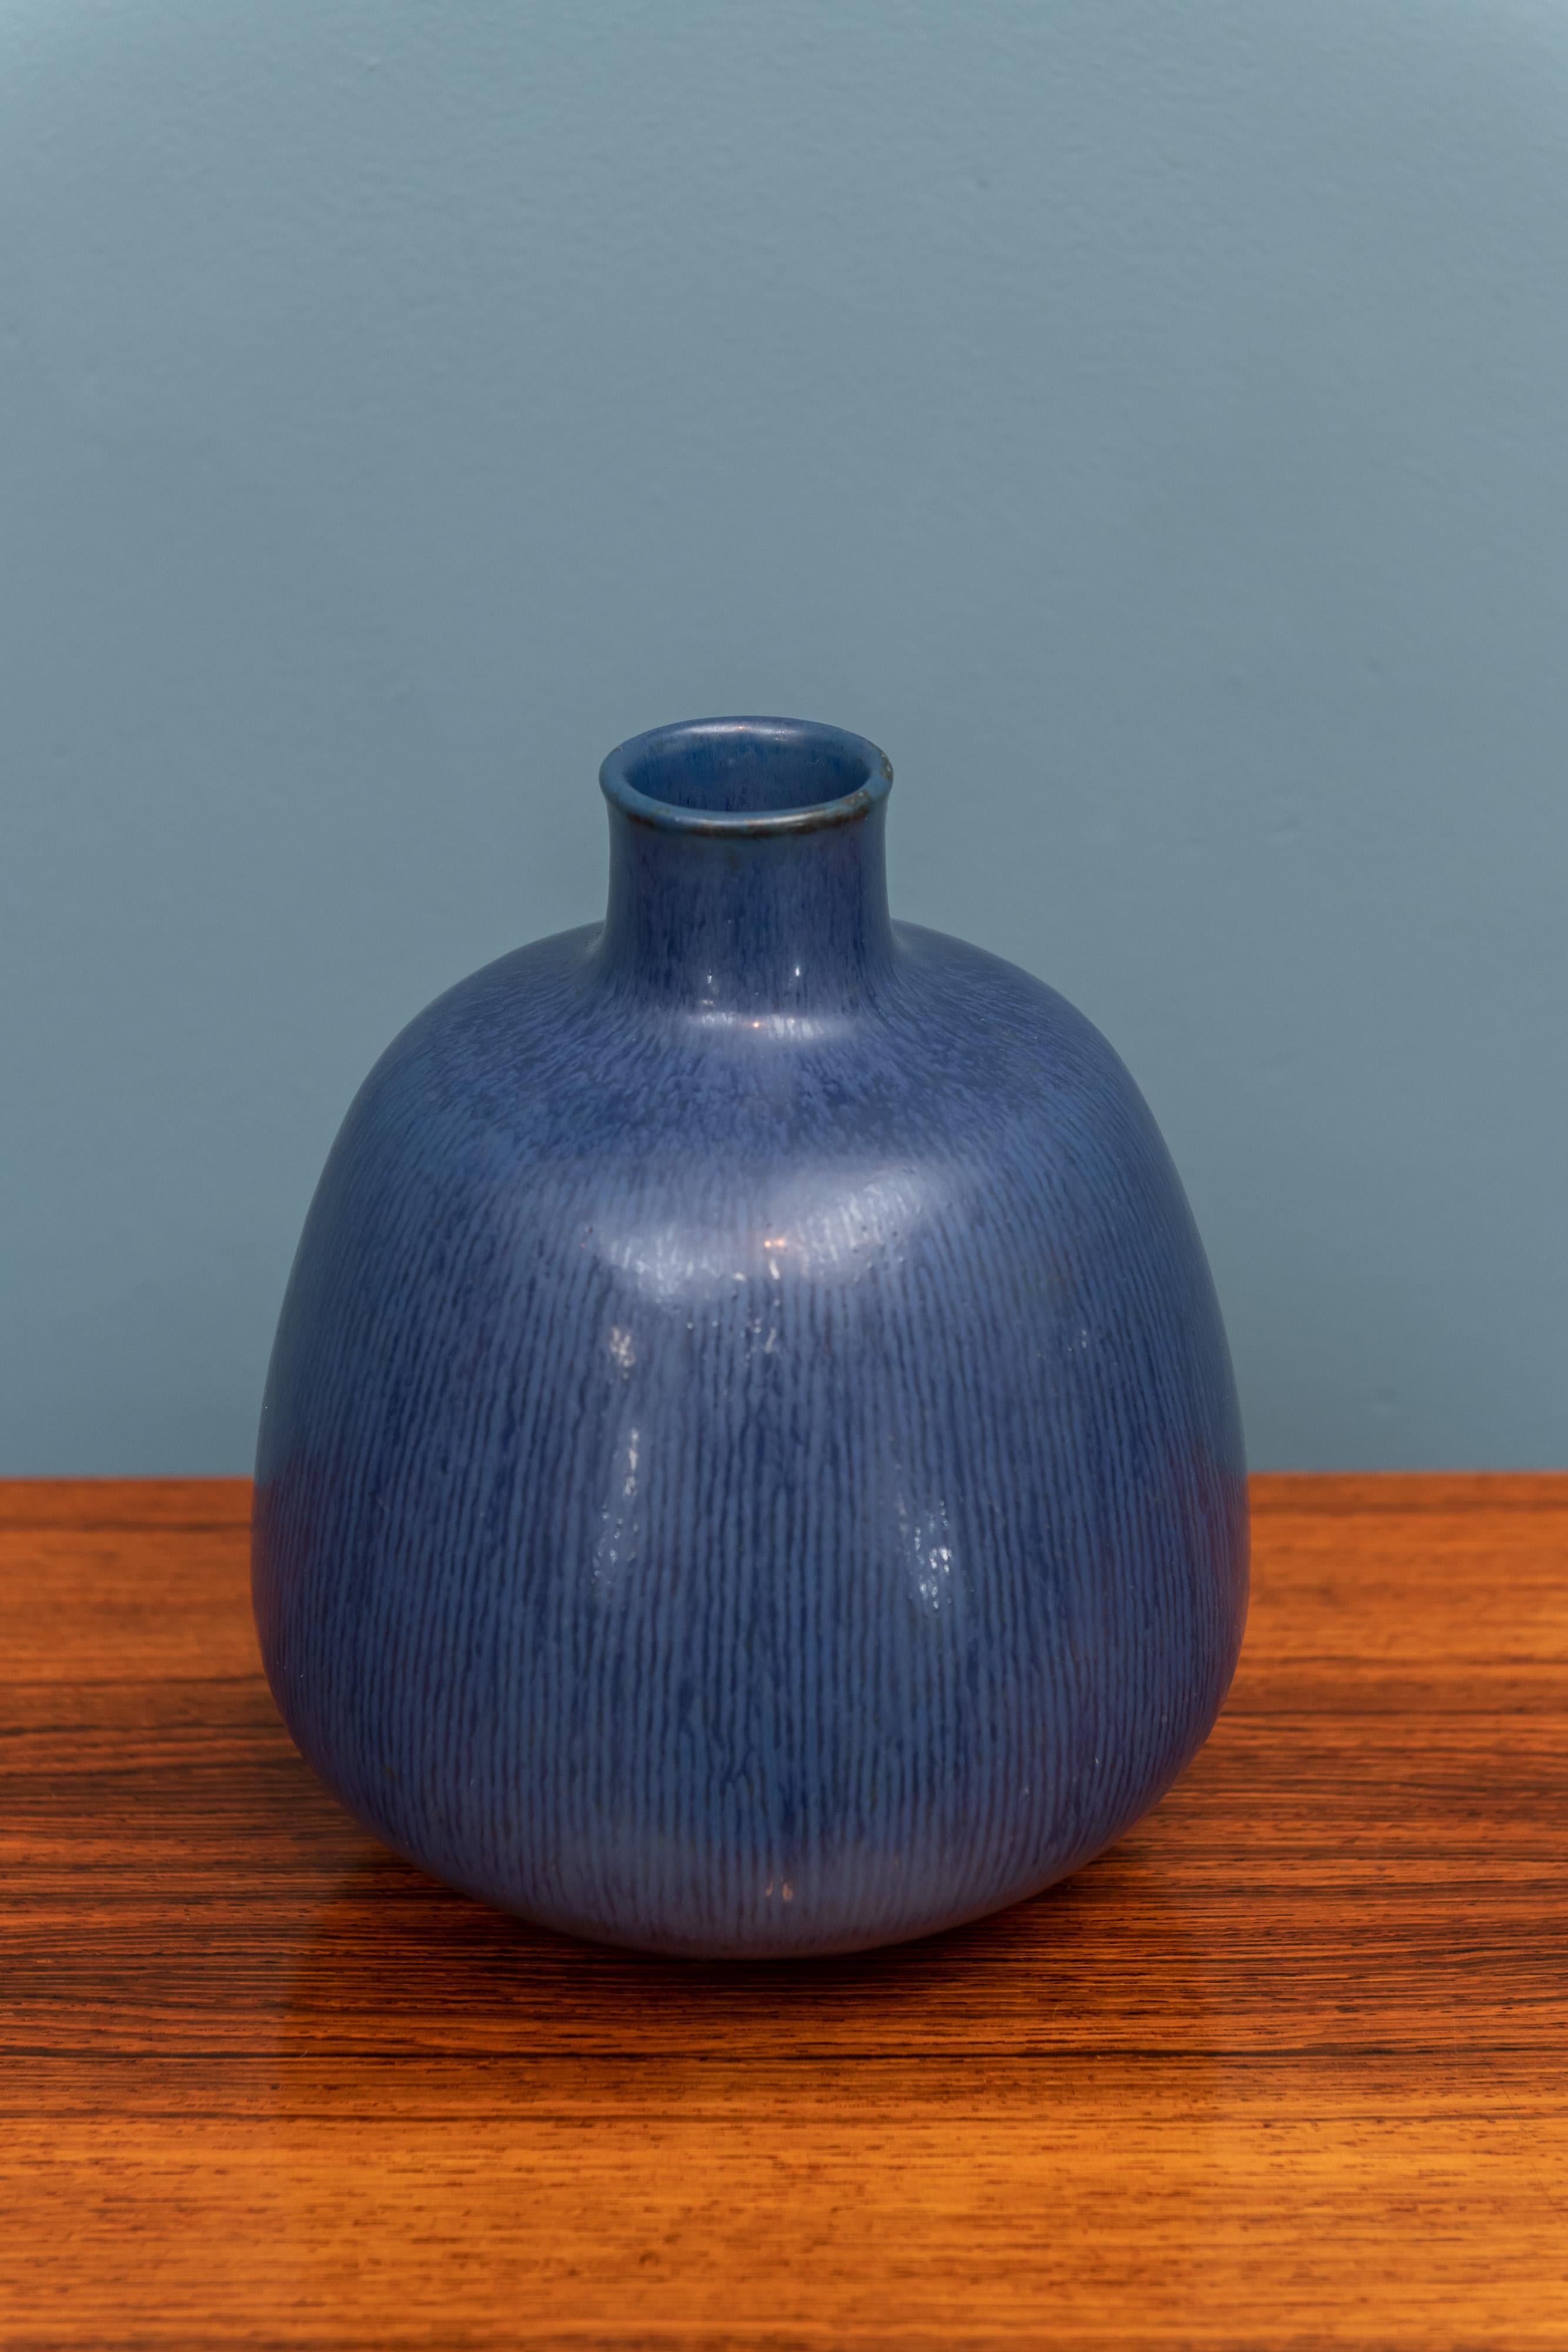 Scandinavian Modern vase by Saxbo, Denmark.